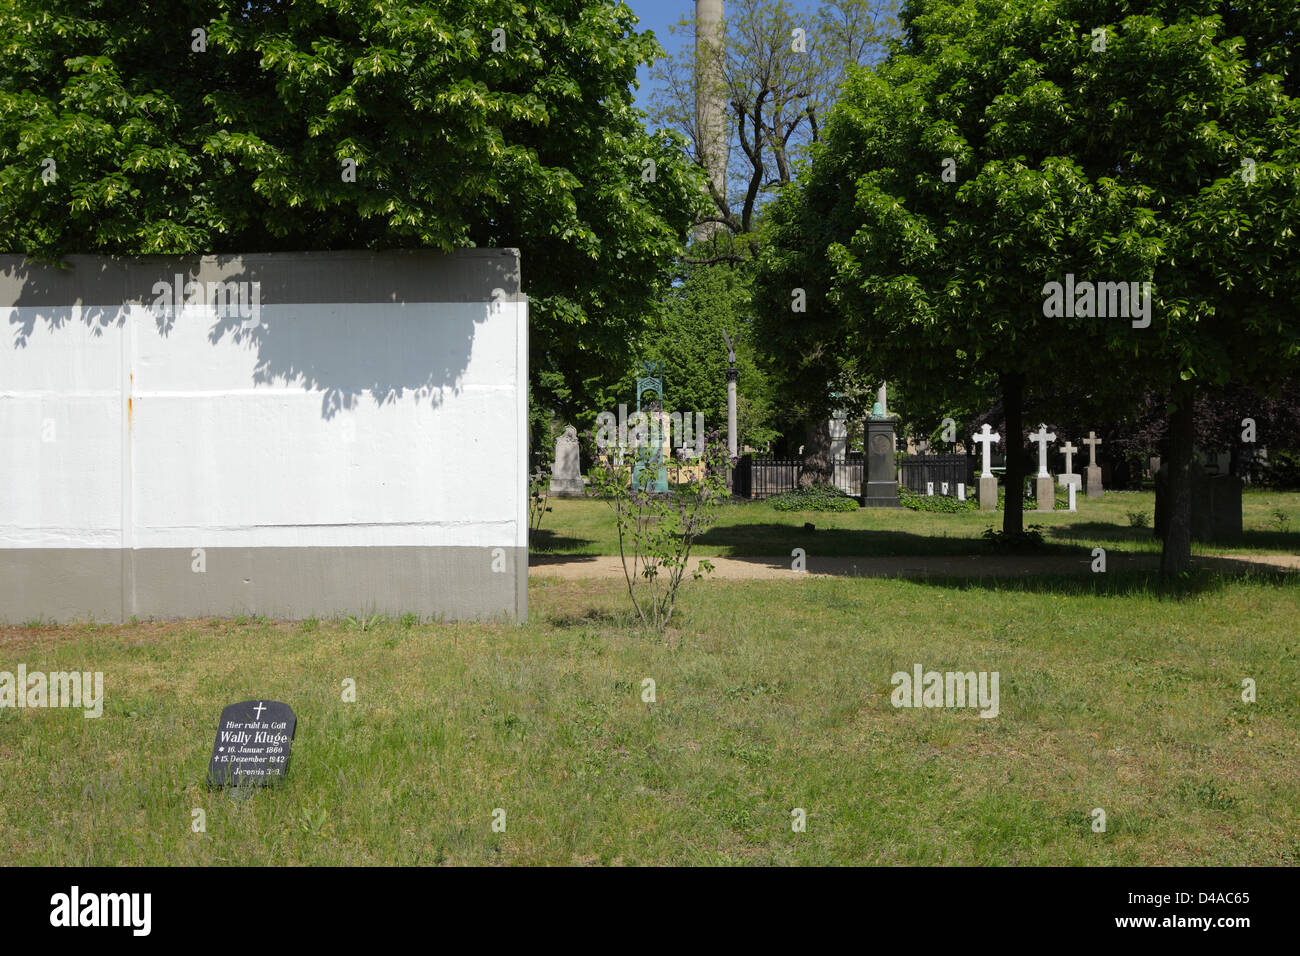 Berlin, Germany, on the tombs Invalidenfriedhof Stock Photo